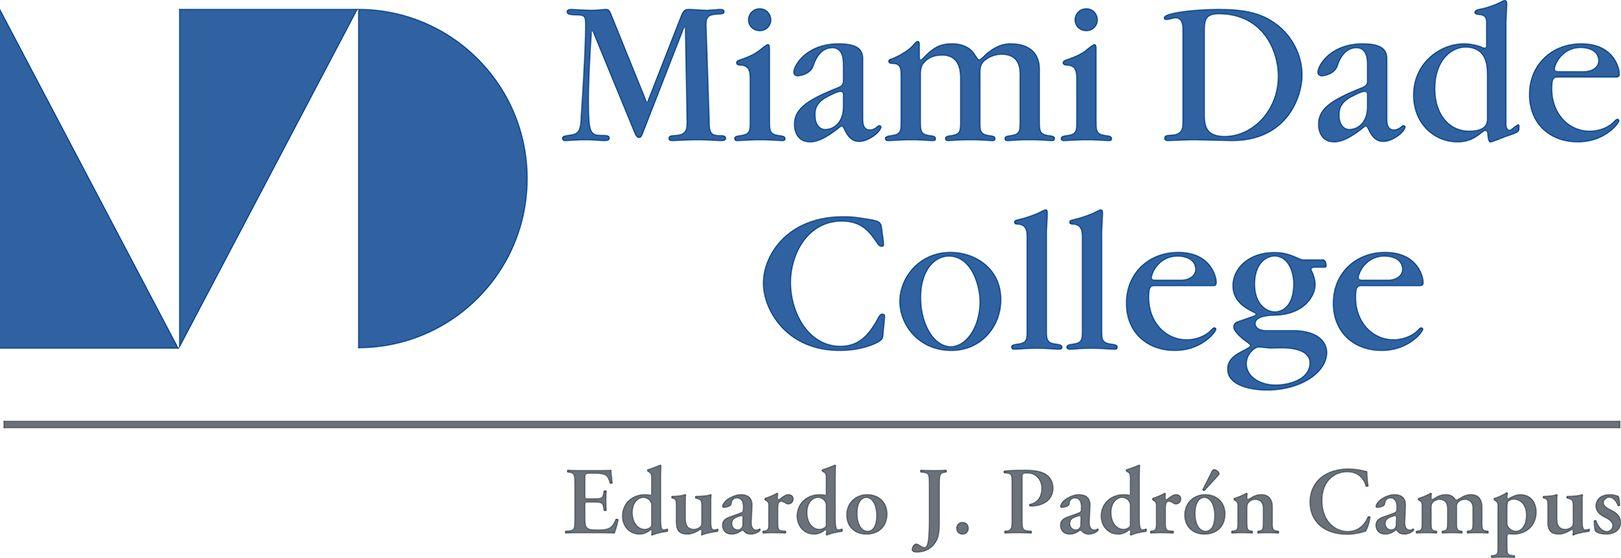 MDC Logo - Resources